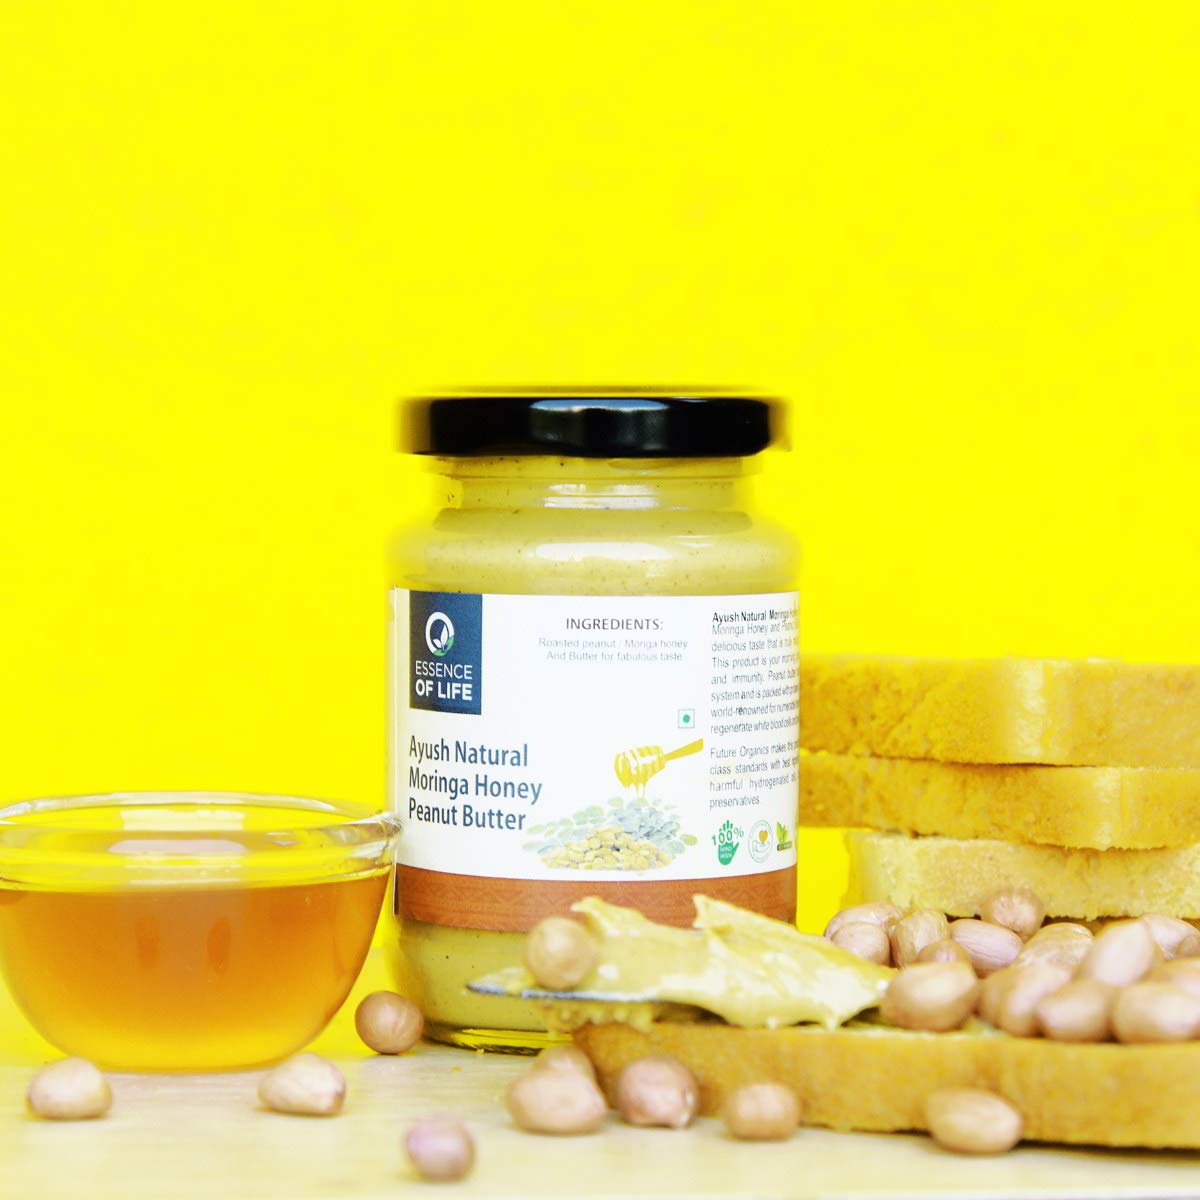 Ayush Natural Moringa Honey PeanutButter